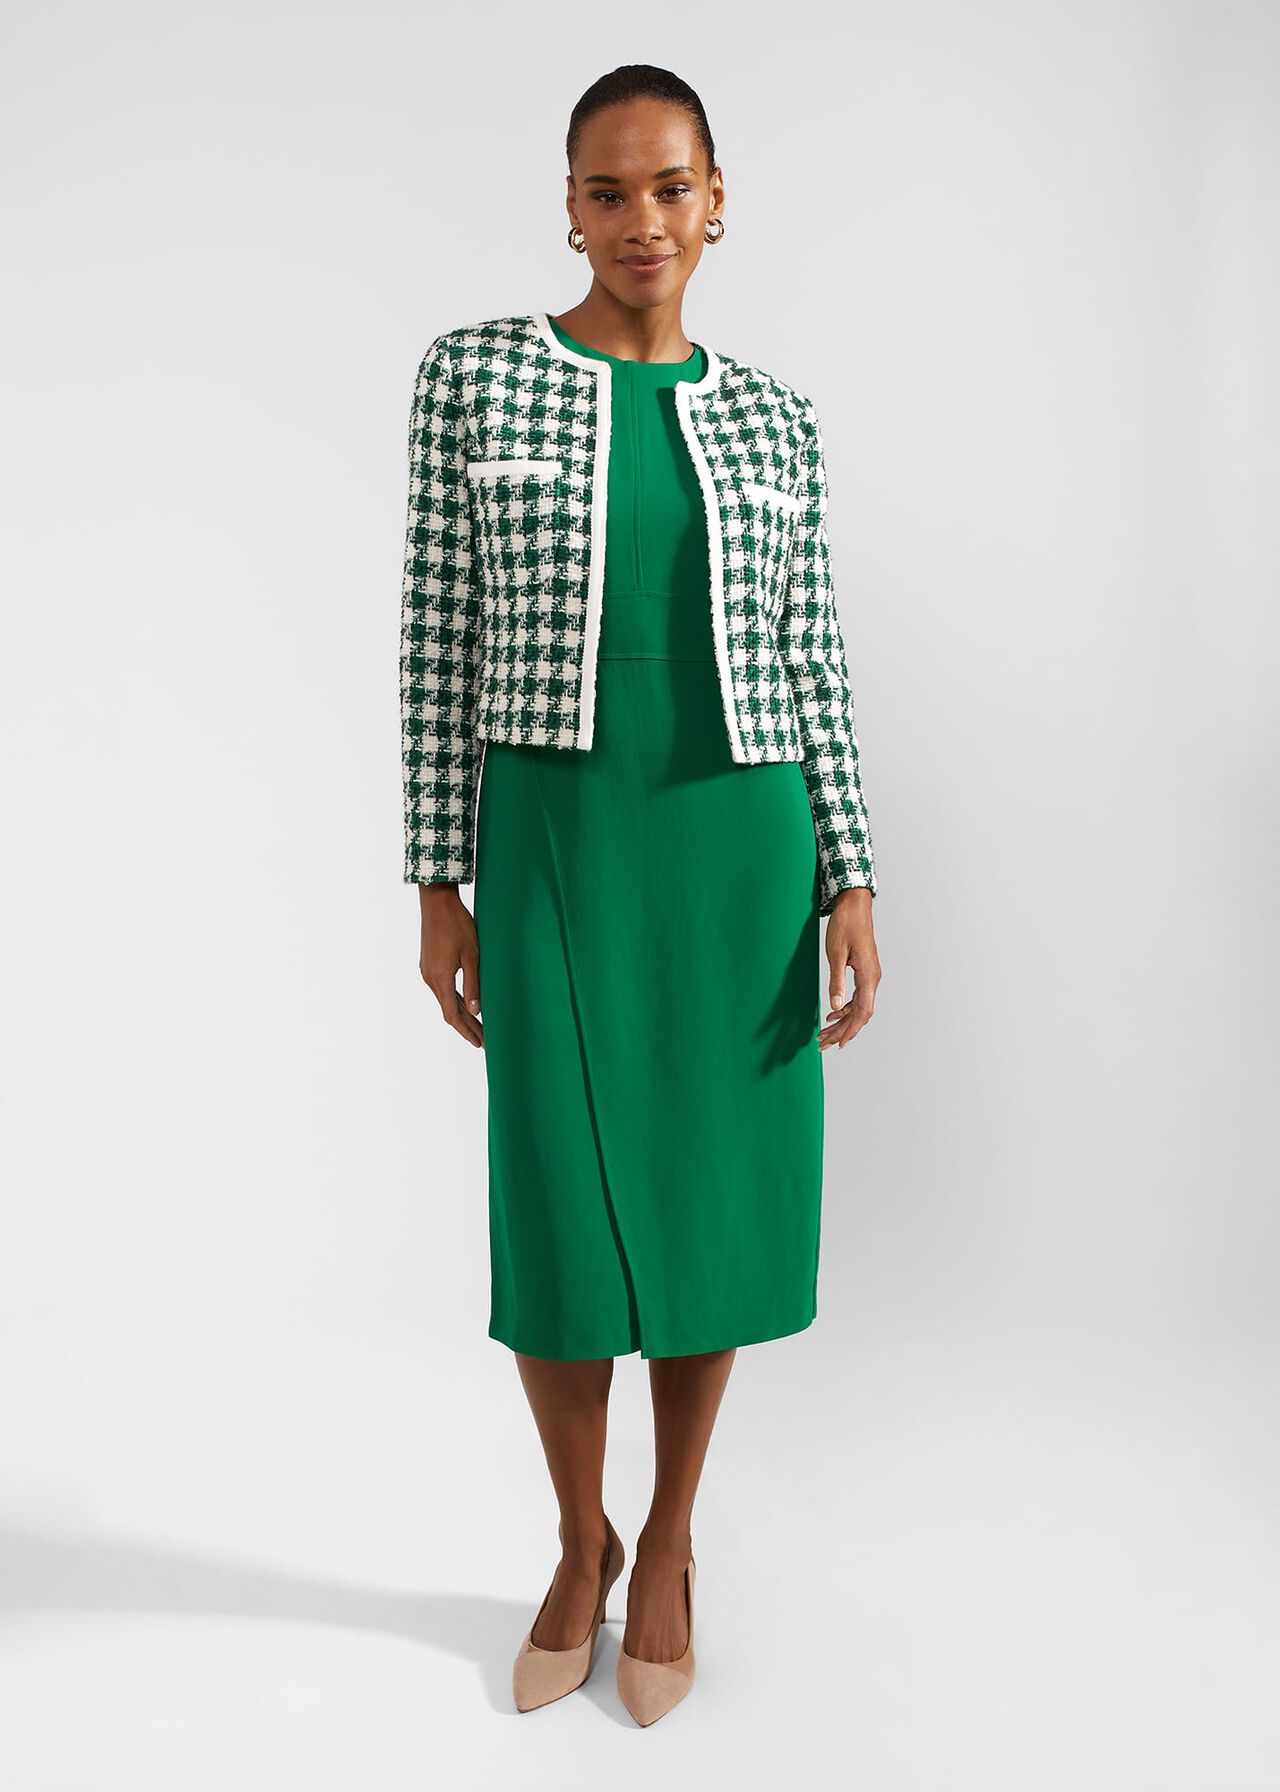 Genevieve Cotton Blend Jacket, Green Ivory, hi-res